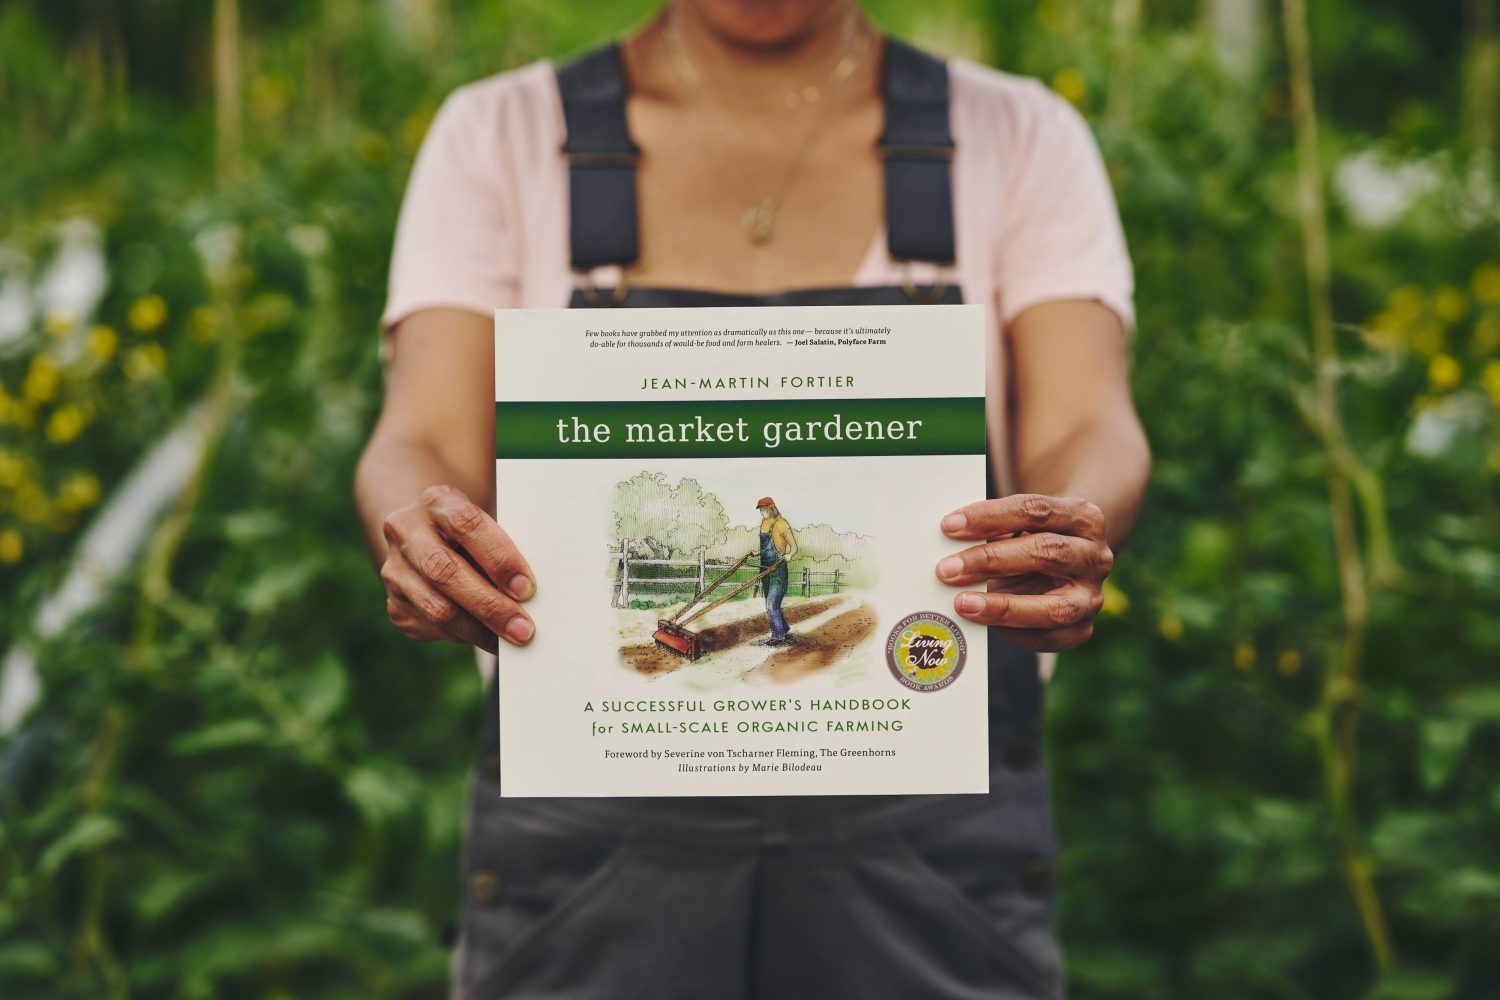 The Market Gardener A Successful Grower’s Handbook for Small-Scale Organic Farming - book